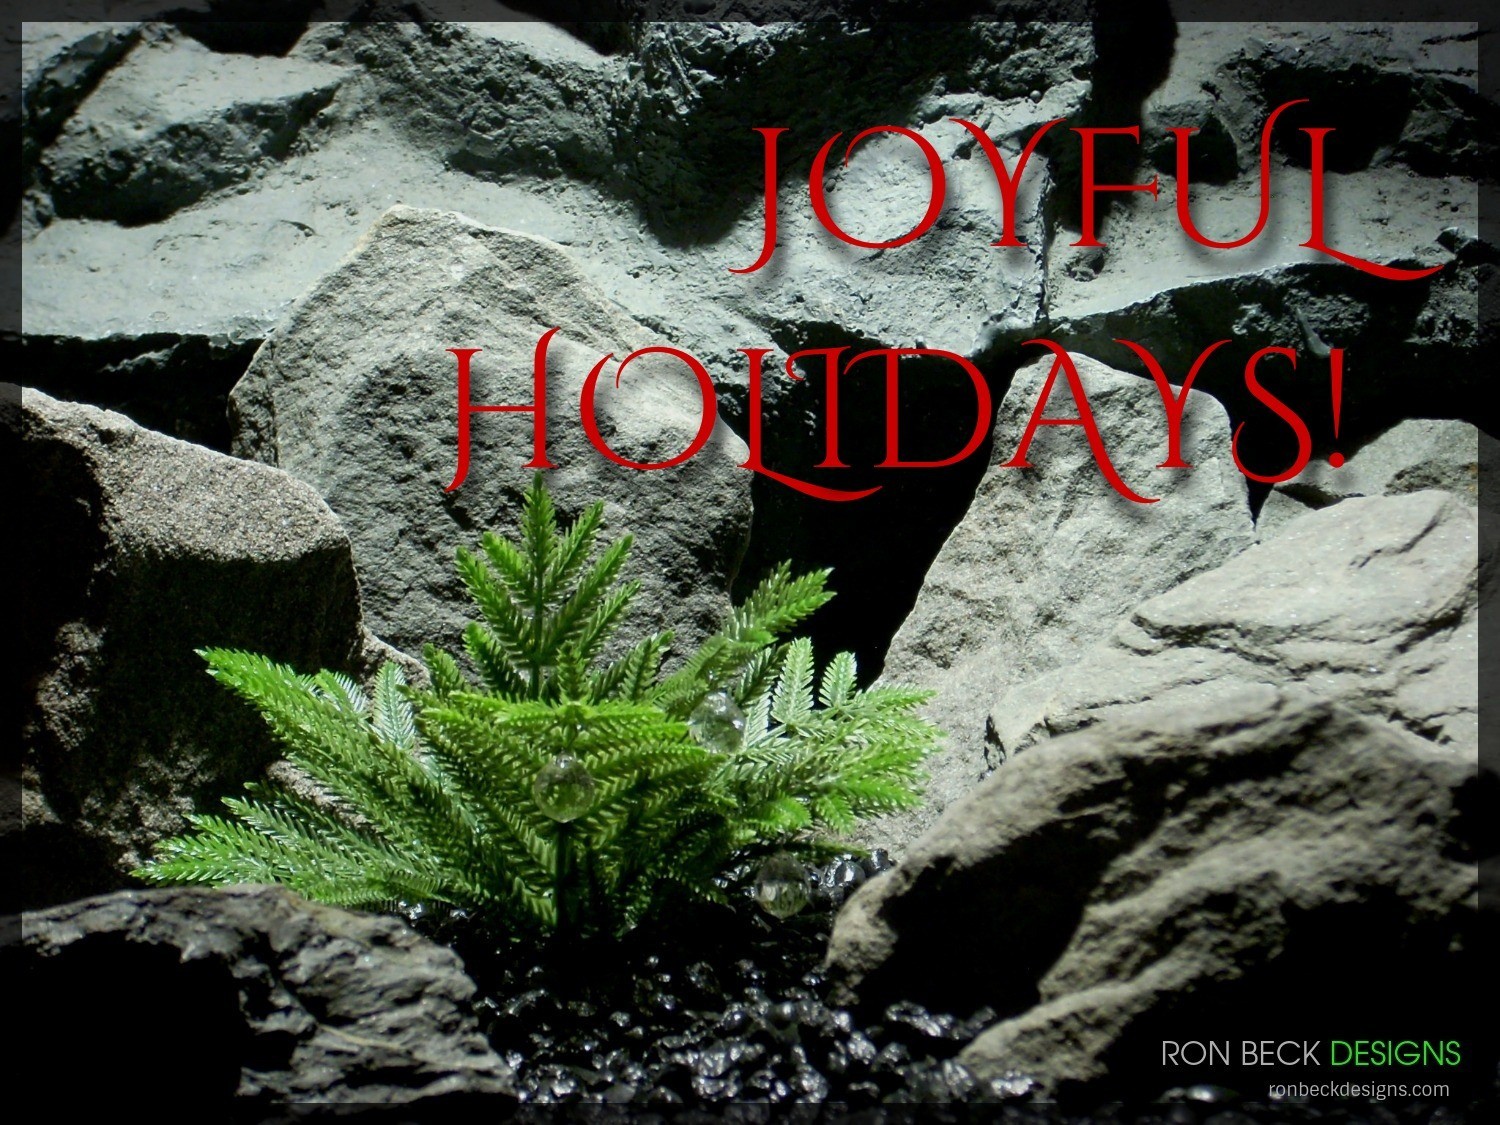 Joyful Holidays - Ron Beck Designs - 1100-825-1